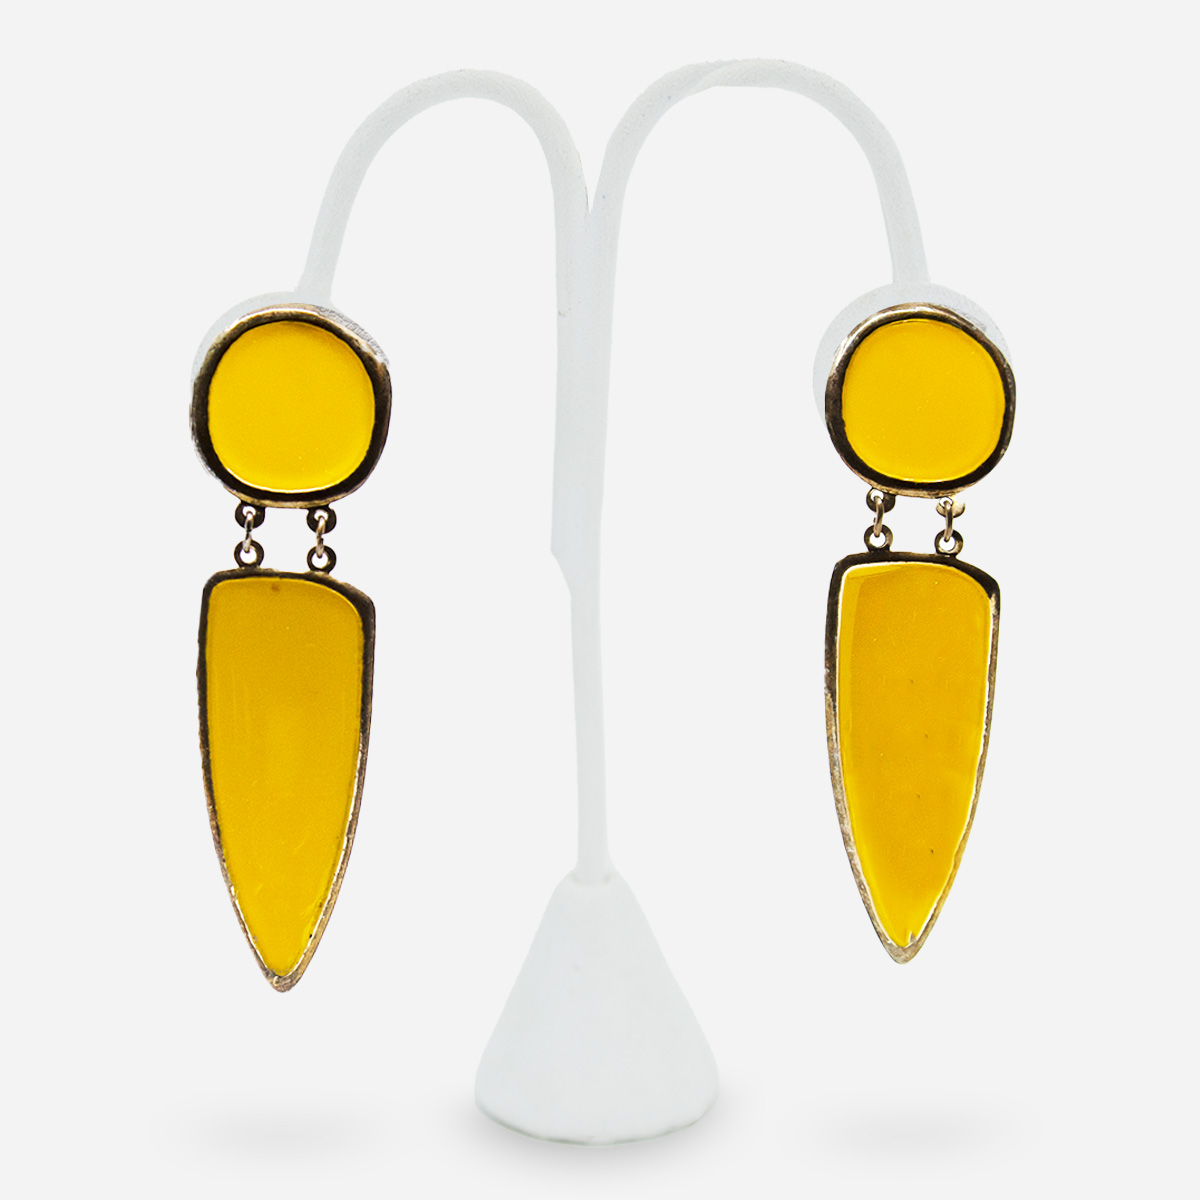 1980s yellow earrings